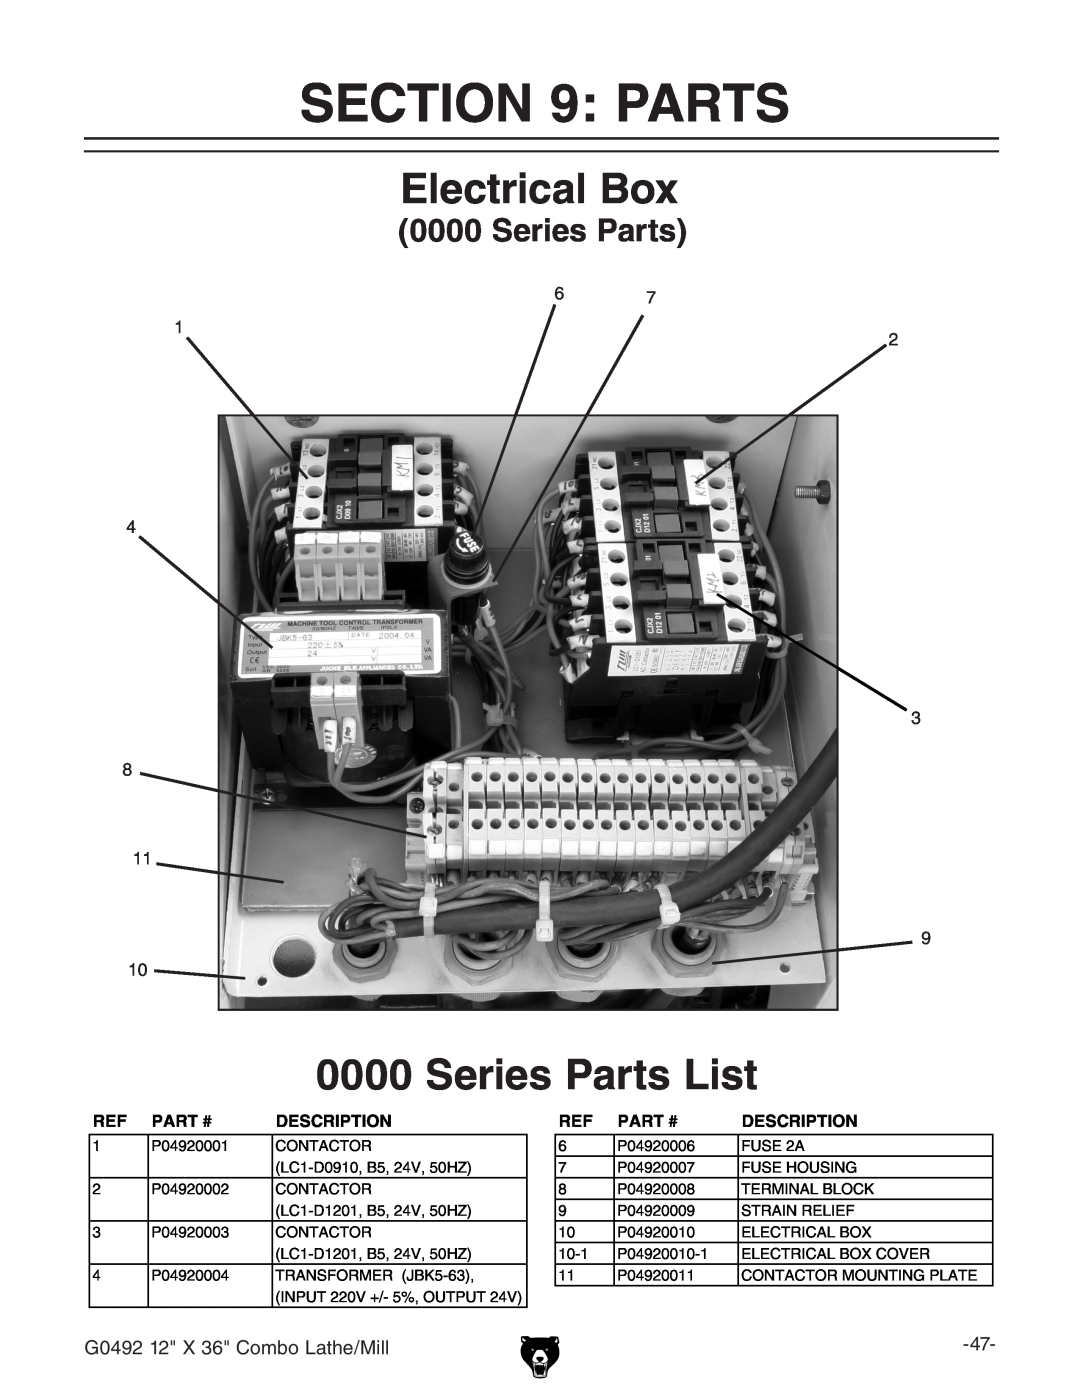 Grizzly G0492 owner manual Electrical Box, Series Parts List, Part #, Description 